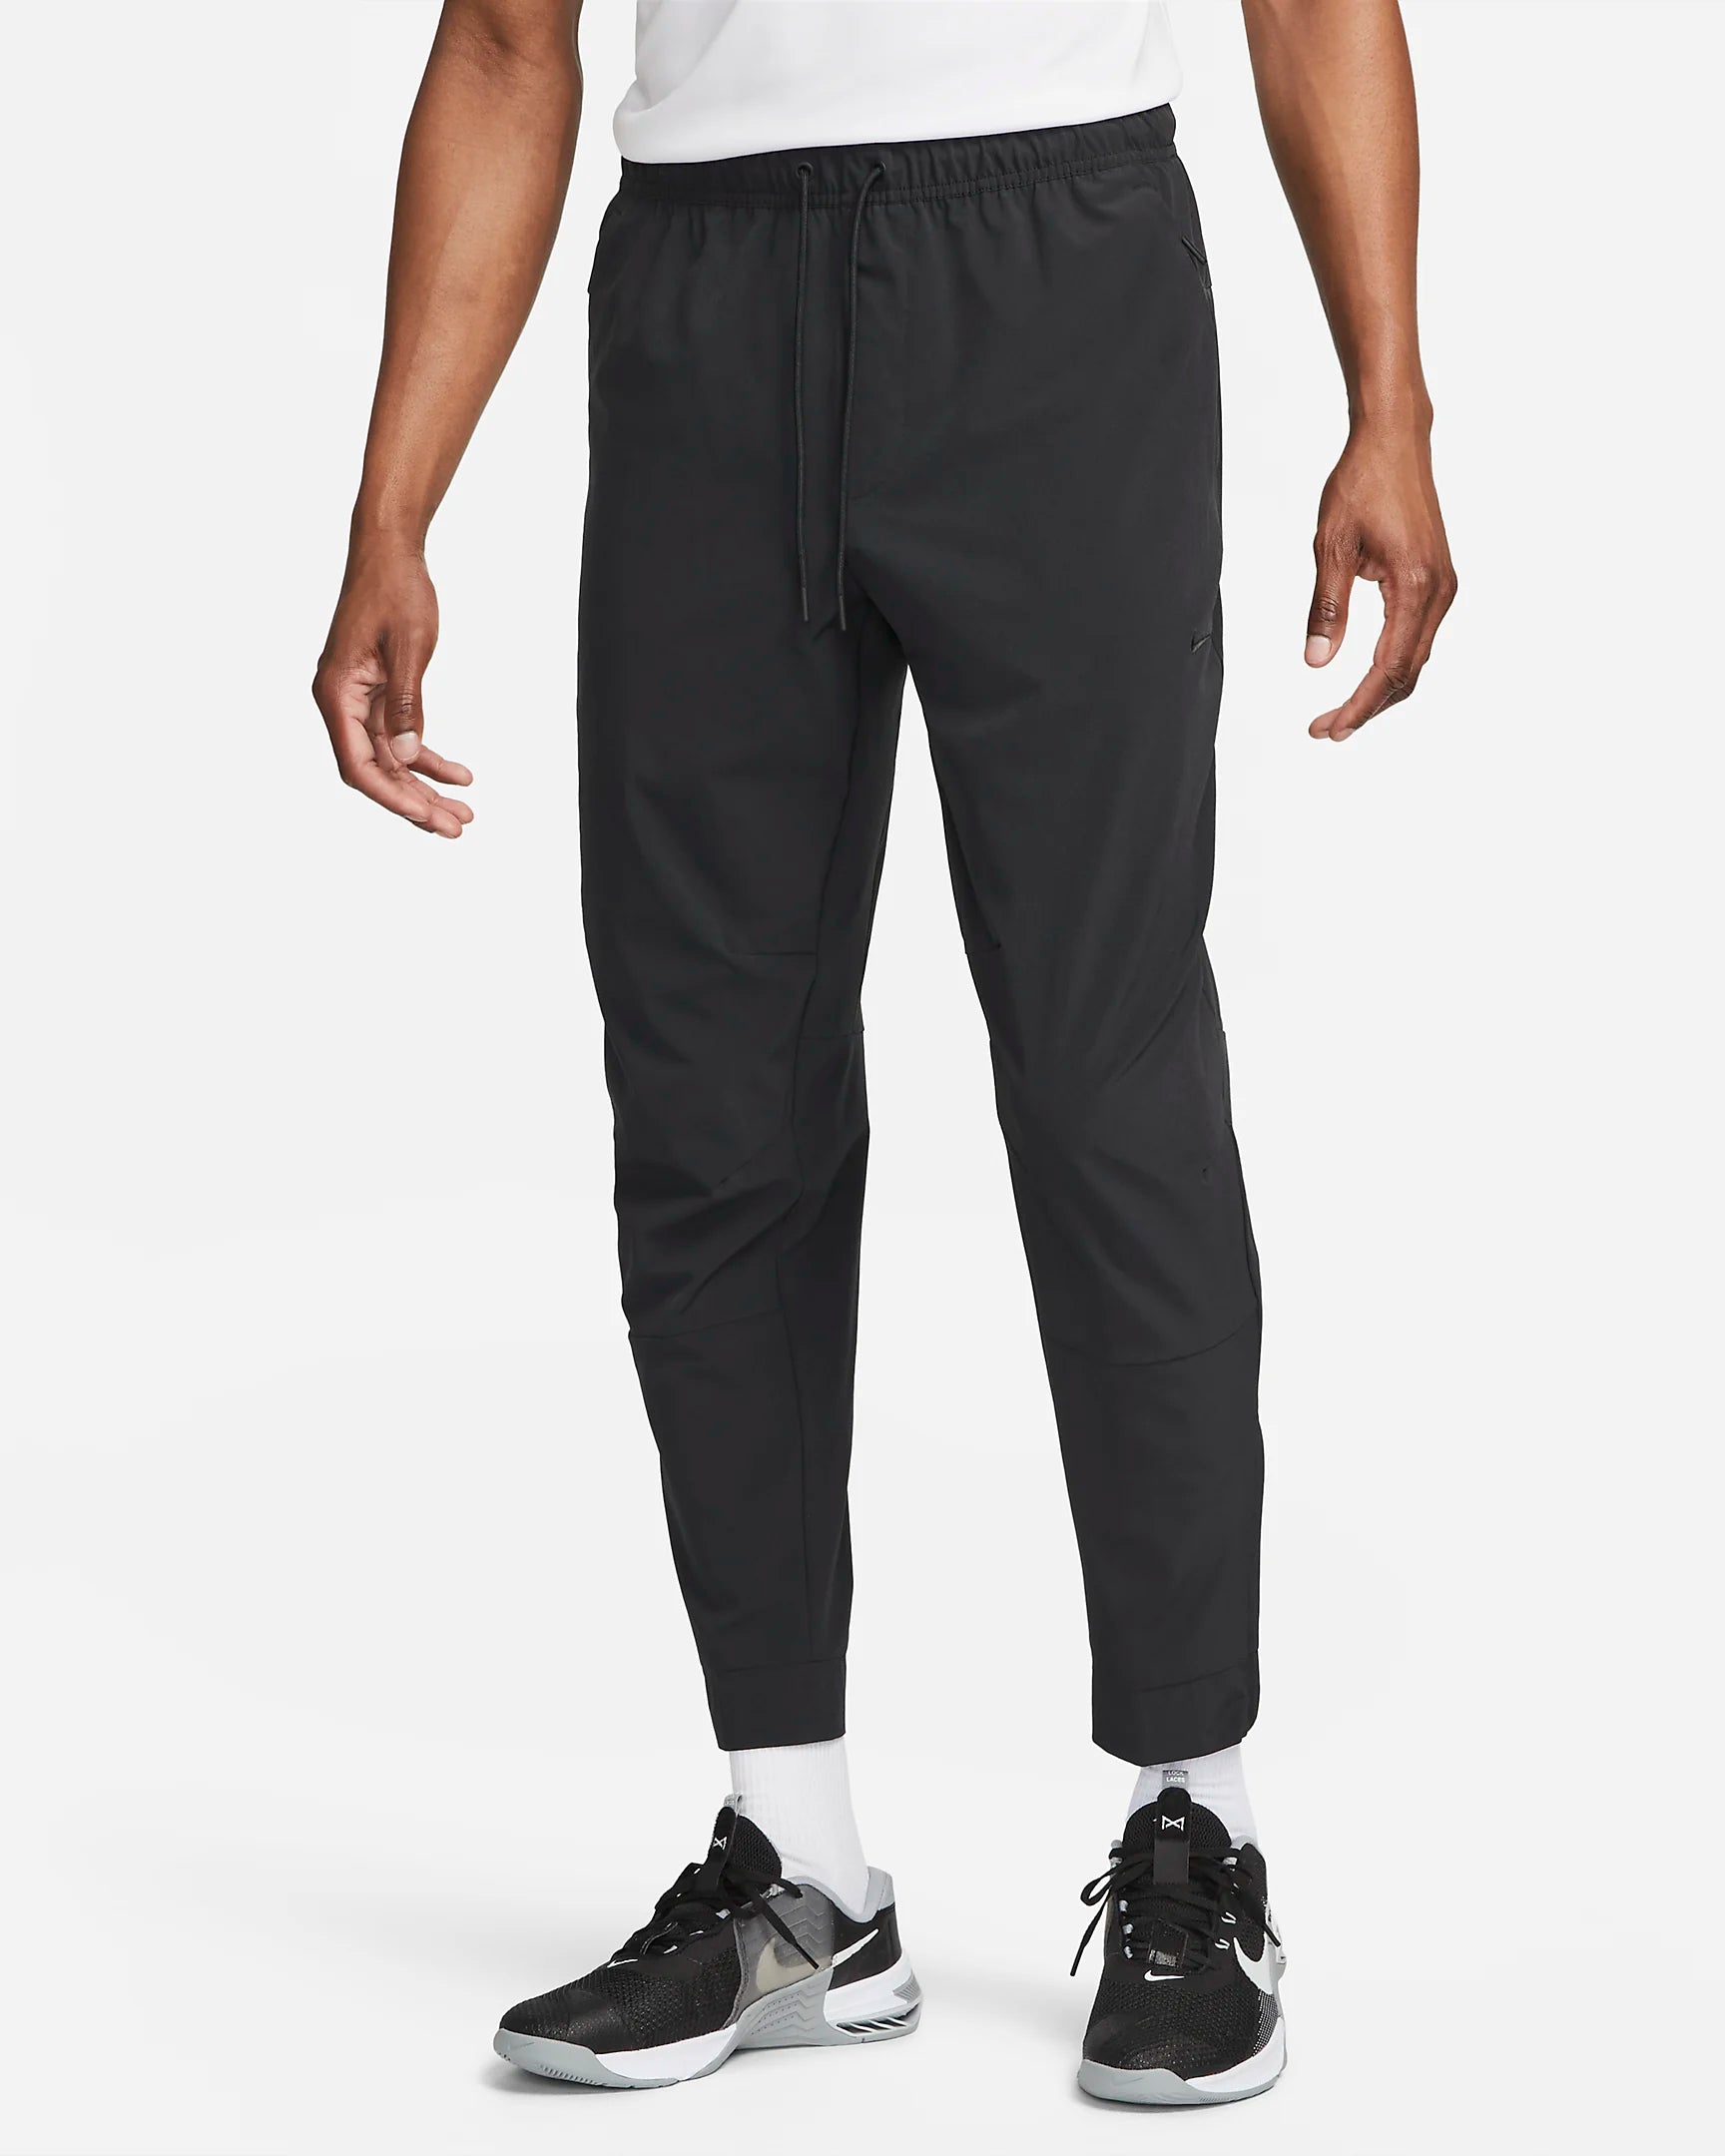 Pantalon jogging Nike Unlimited - Noir